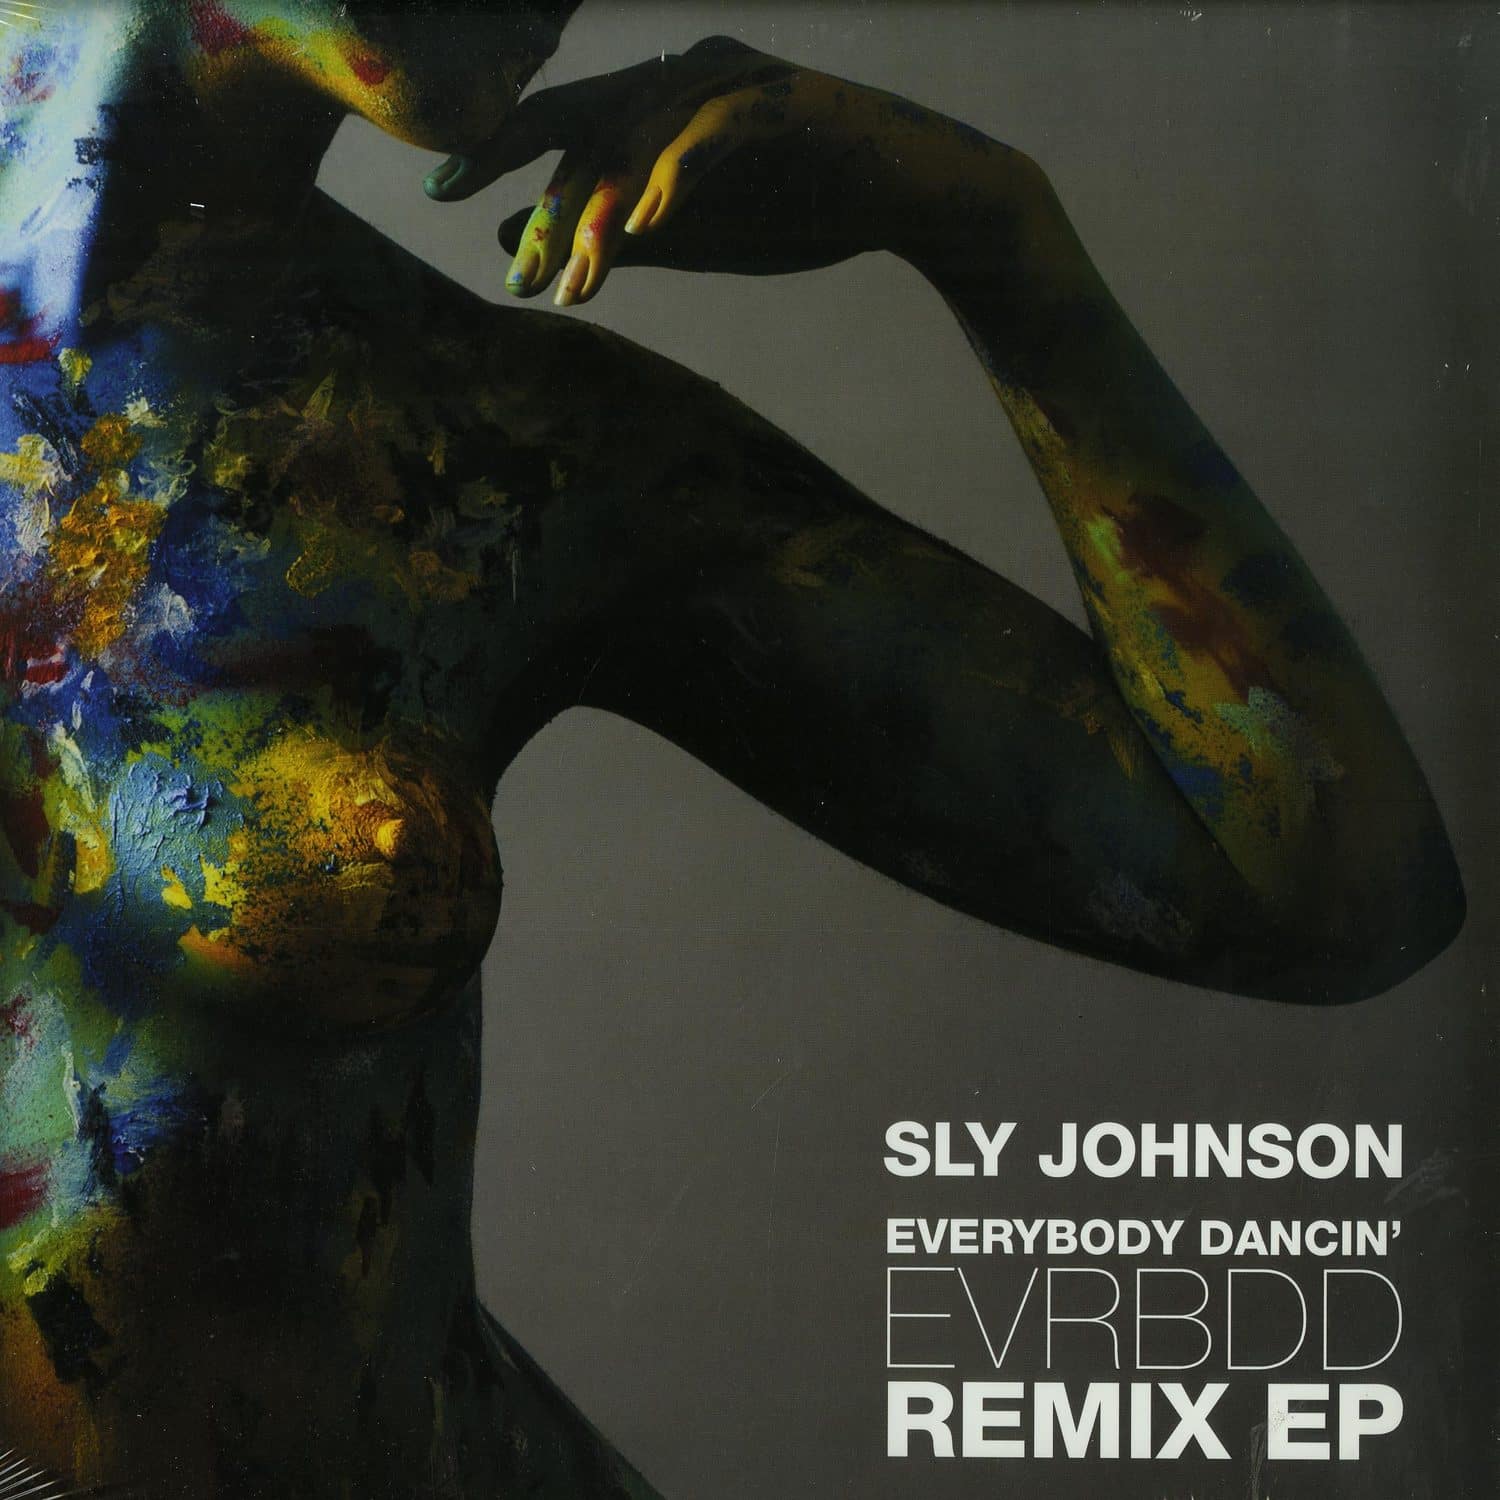 Sly Johnson - EVRBDD 